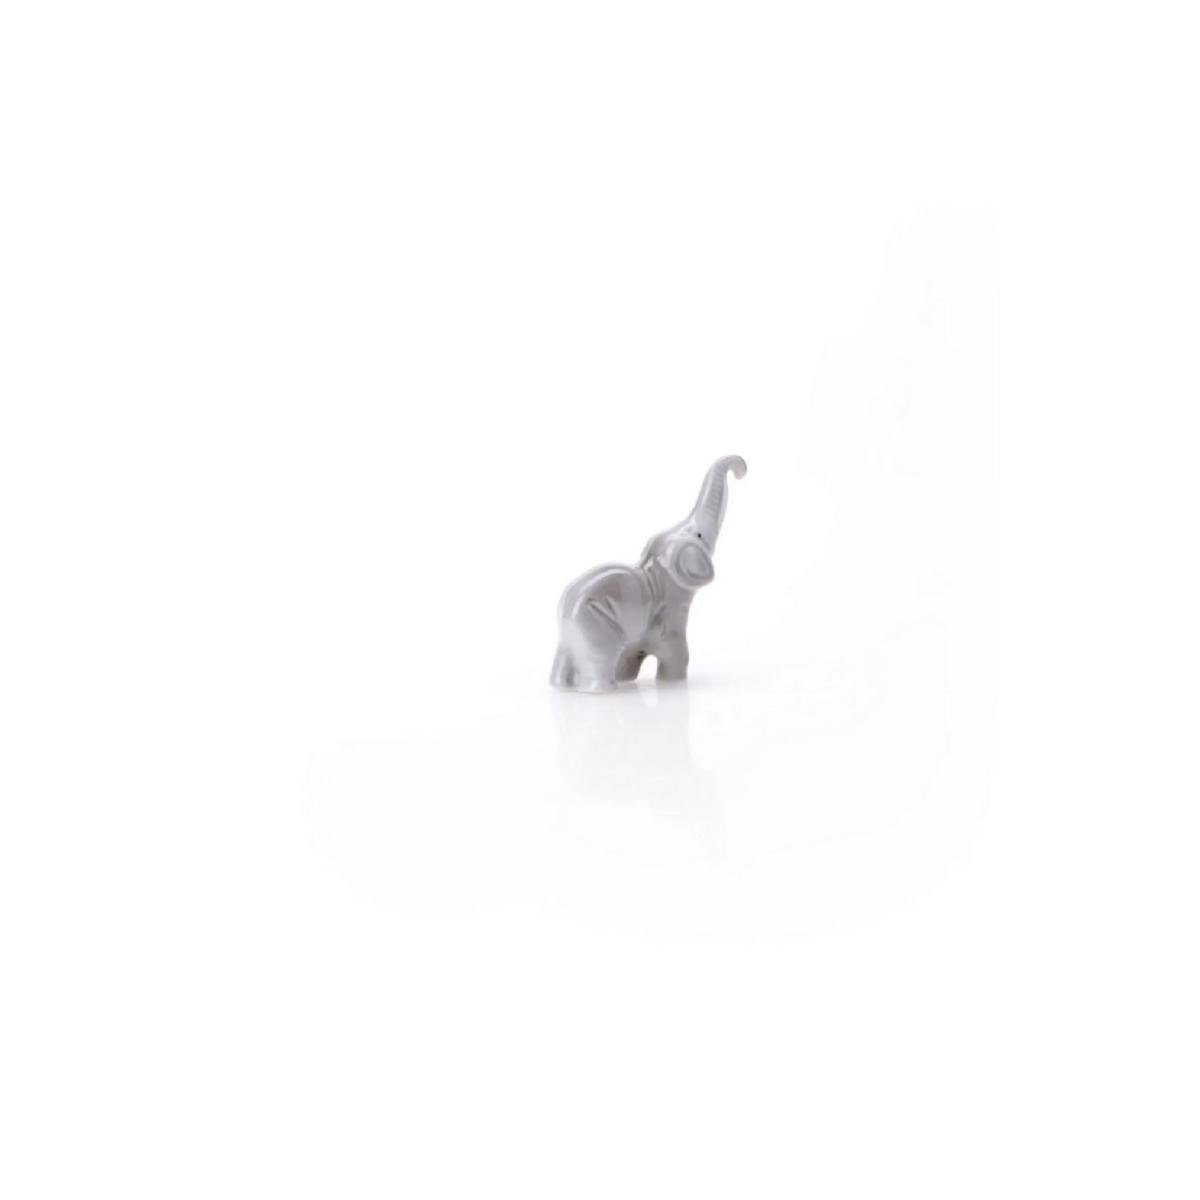 Wagner & Apel Porzellan Dekofigur 2563/40 - Porzellanfigur Elefant klein, 7 cm, weiß